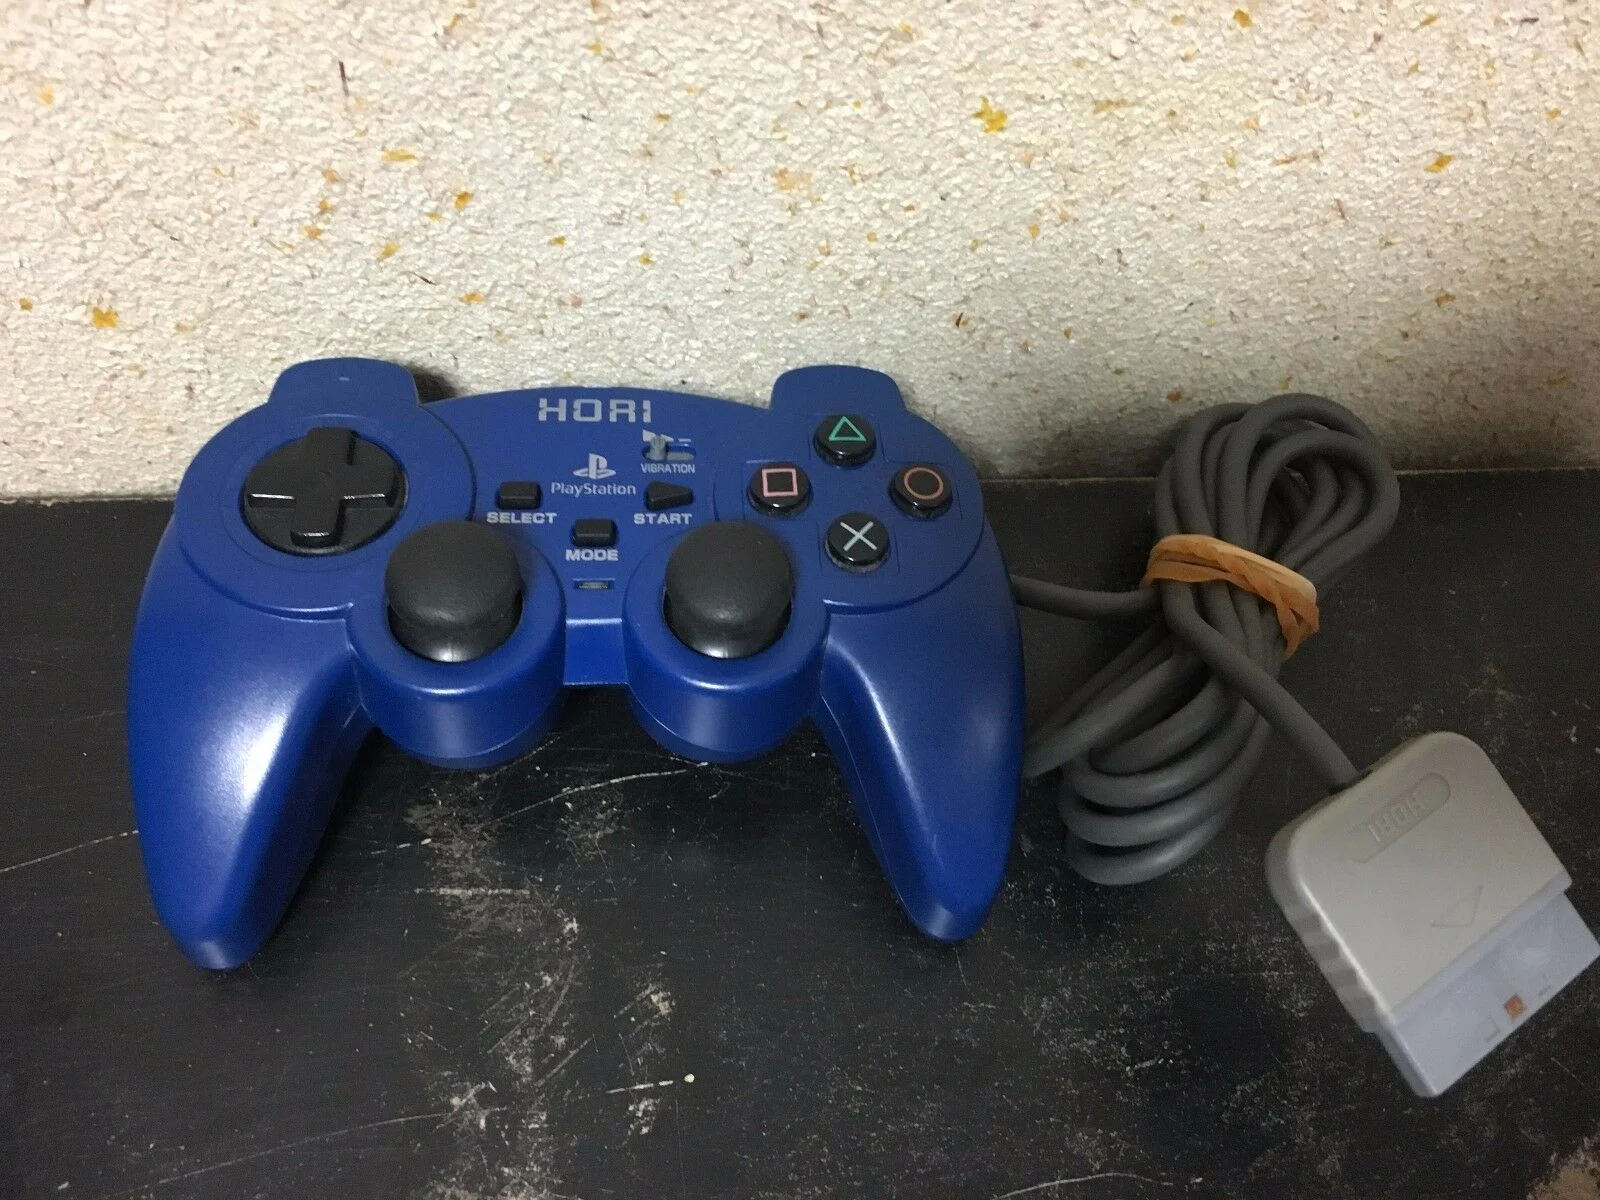  HORI Playstation Analog Sindou Pad Controller